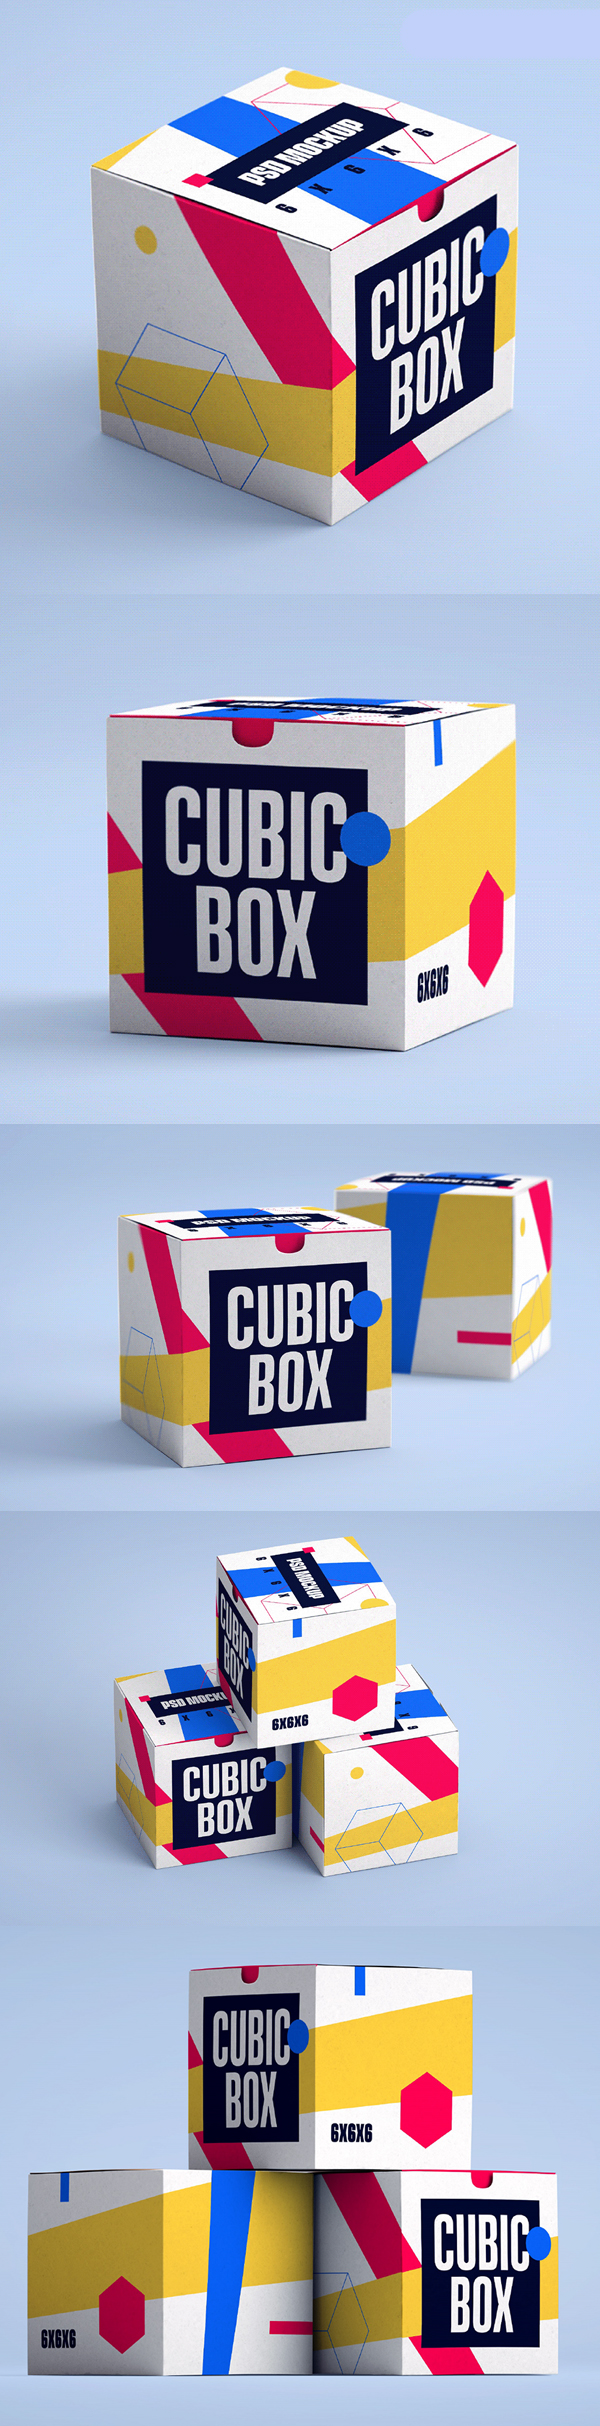 FREE Cubic Box Mockups